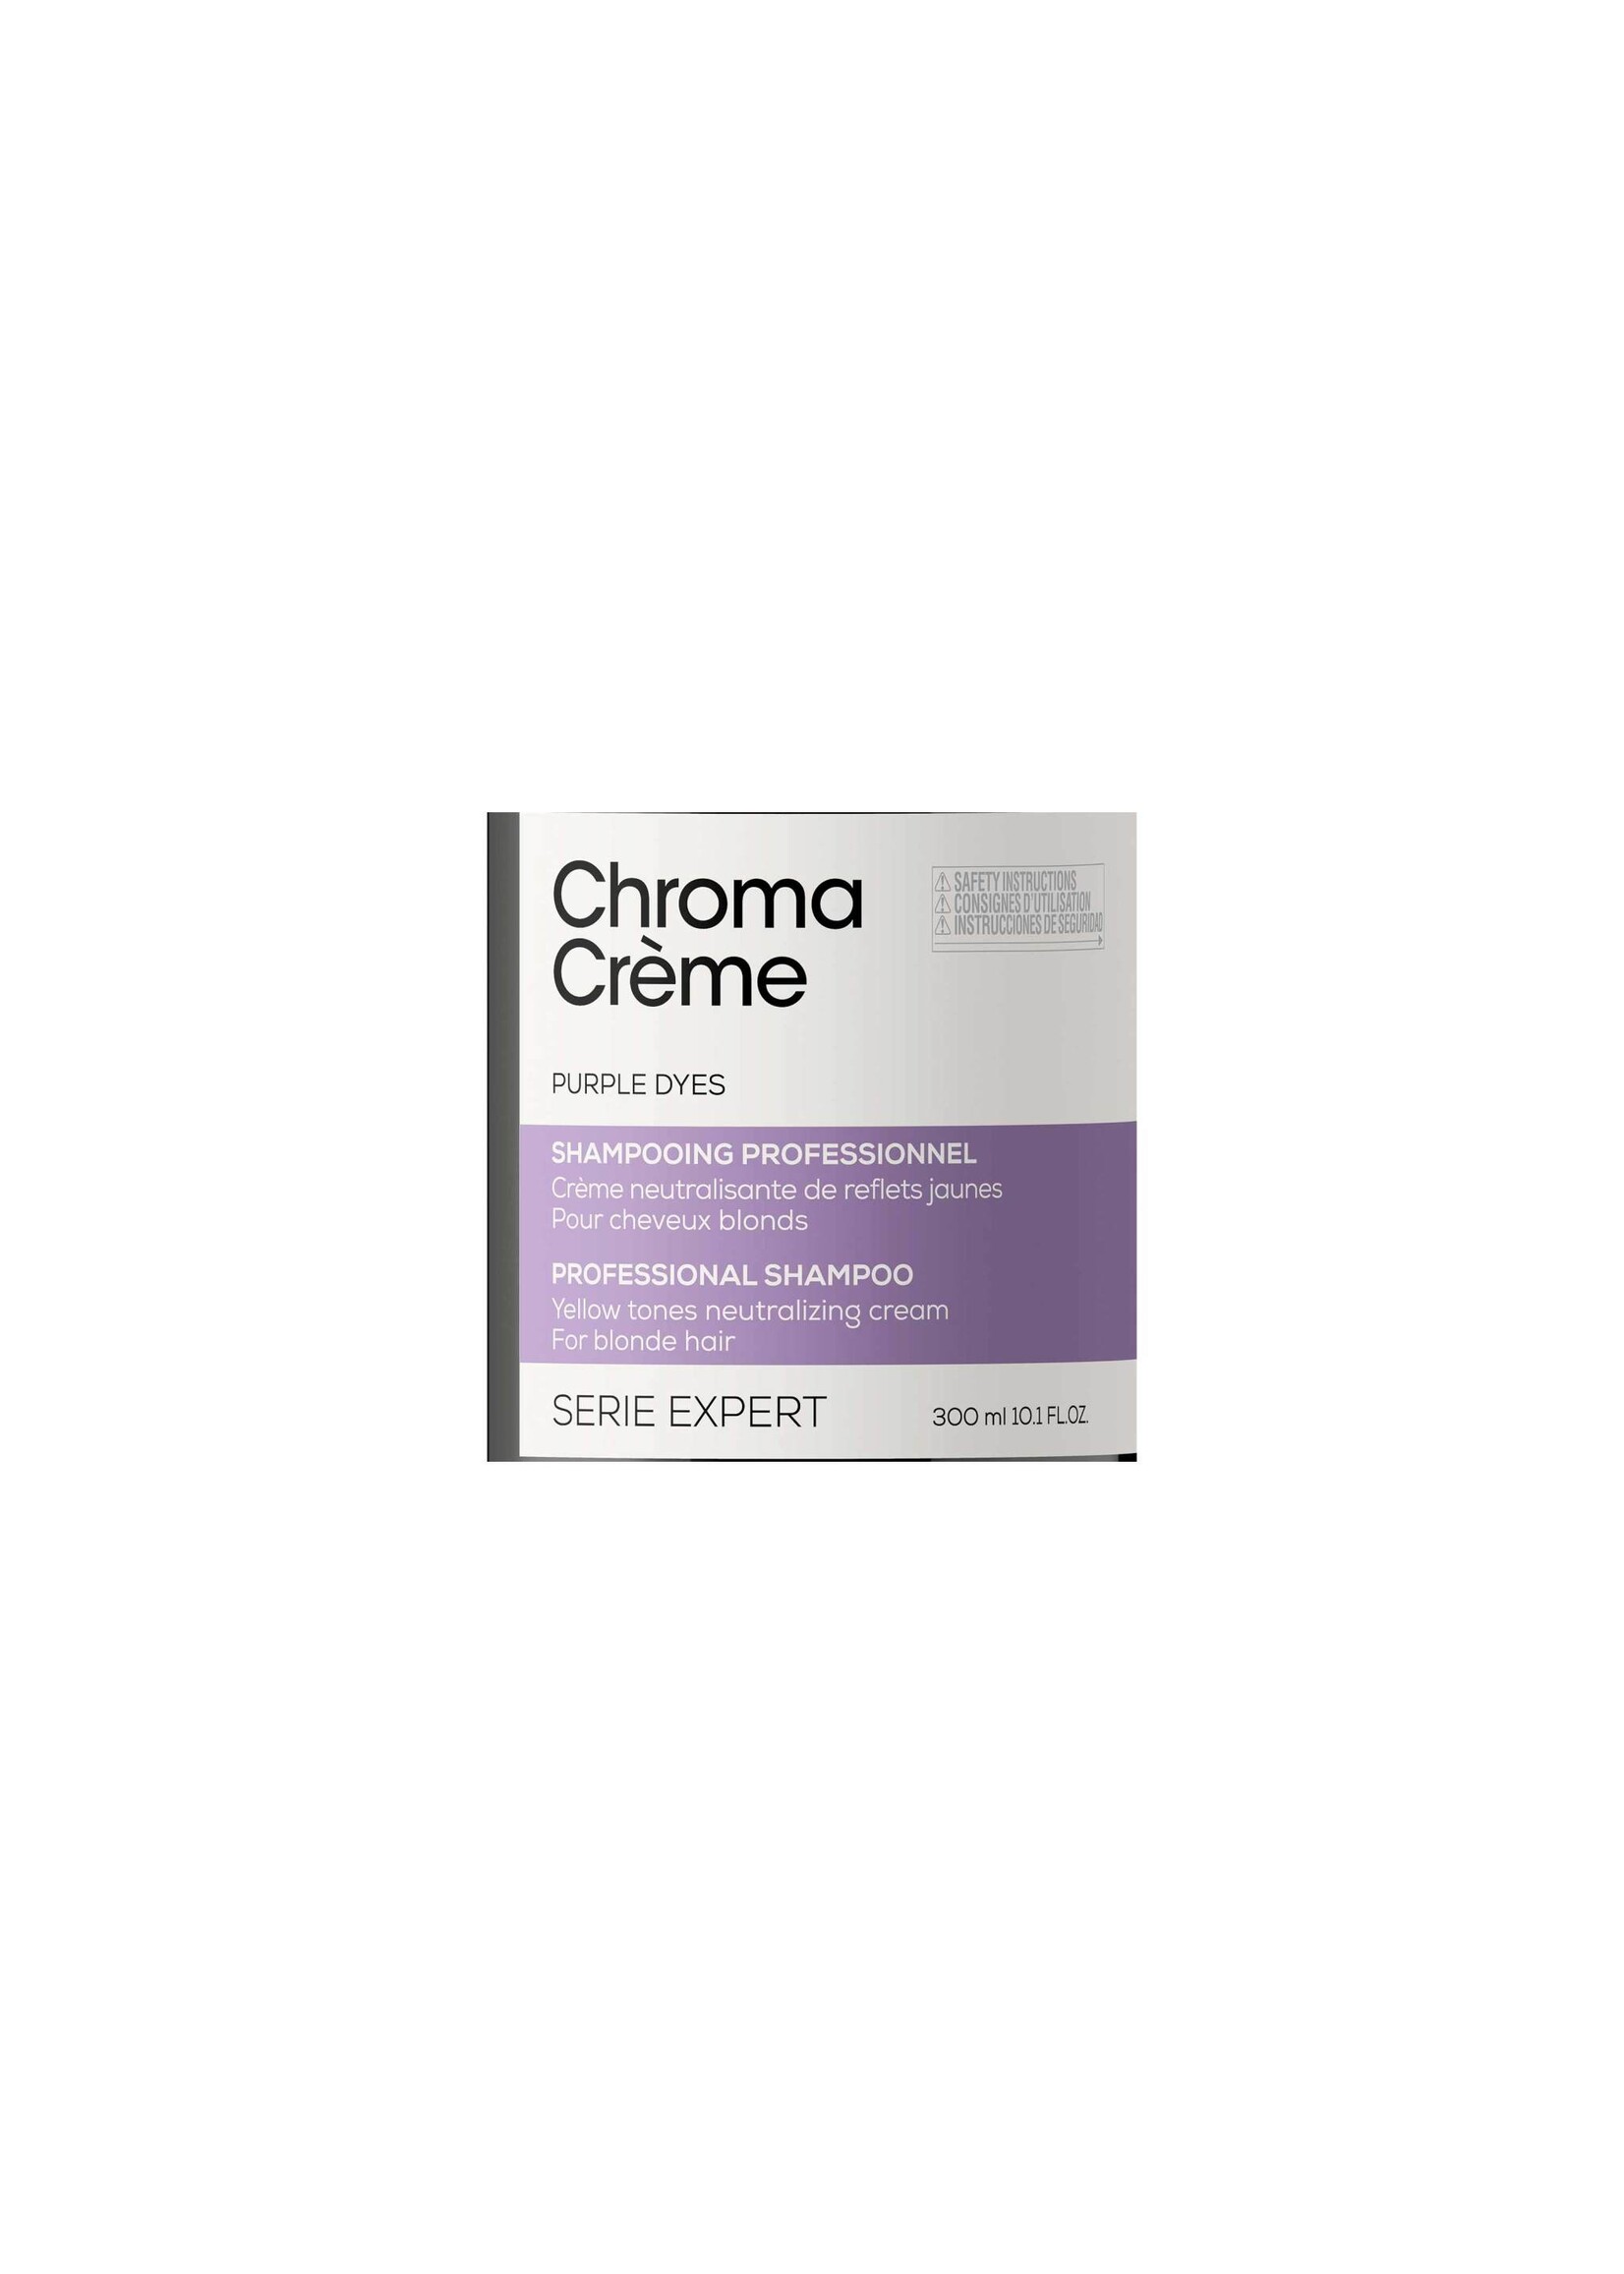 Loreal Professional Loreal Serie Expert Chroma Creme Purple Shampoo 300ml